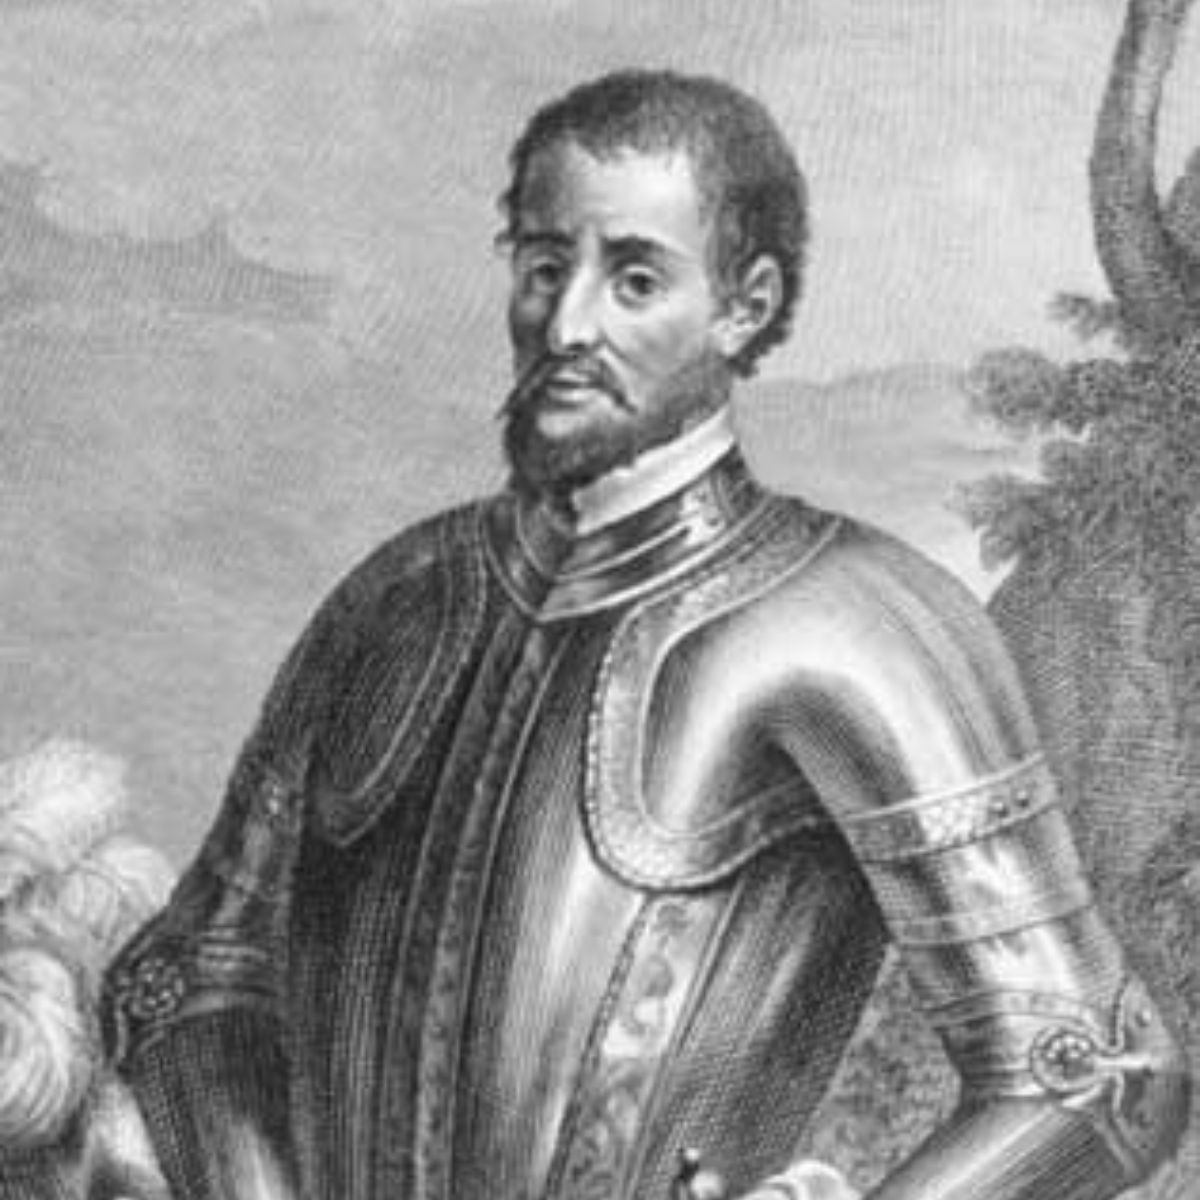 Gaspar de Espinosa - Wikipedia